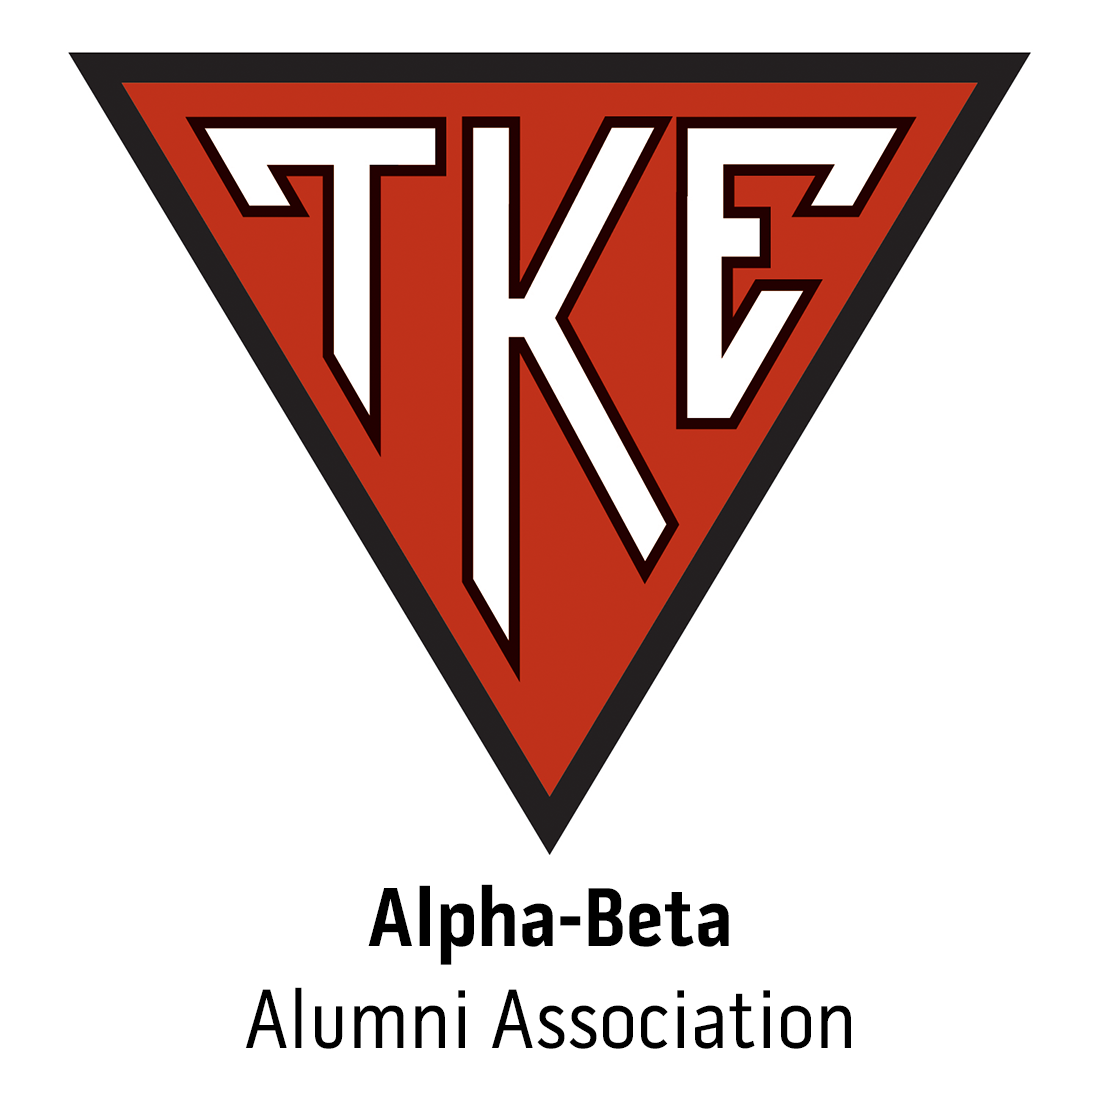 Alpha-Beta Alumni Association at Ohio University